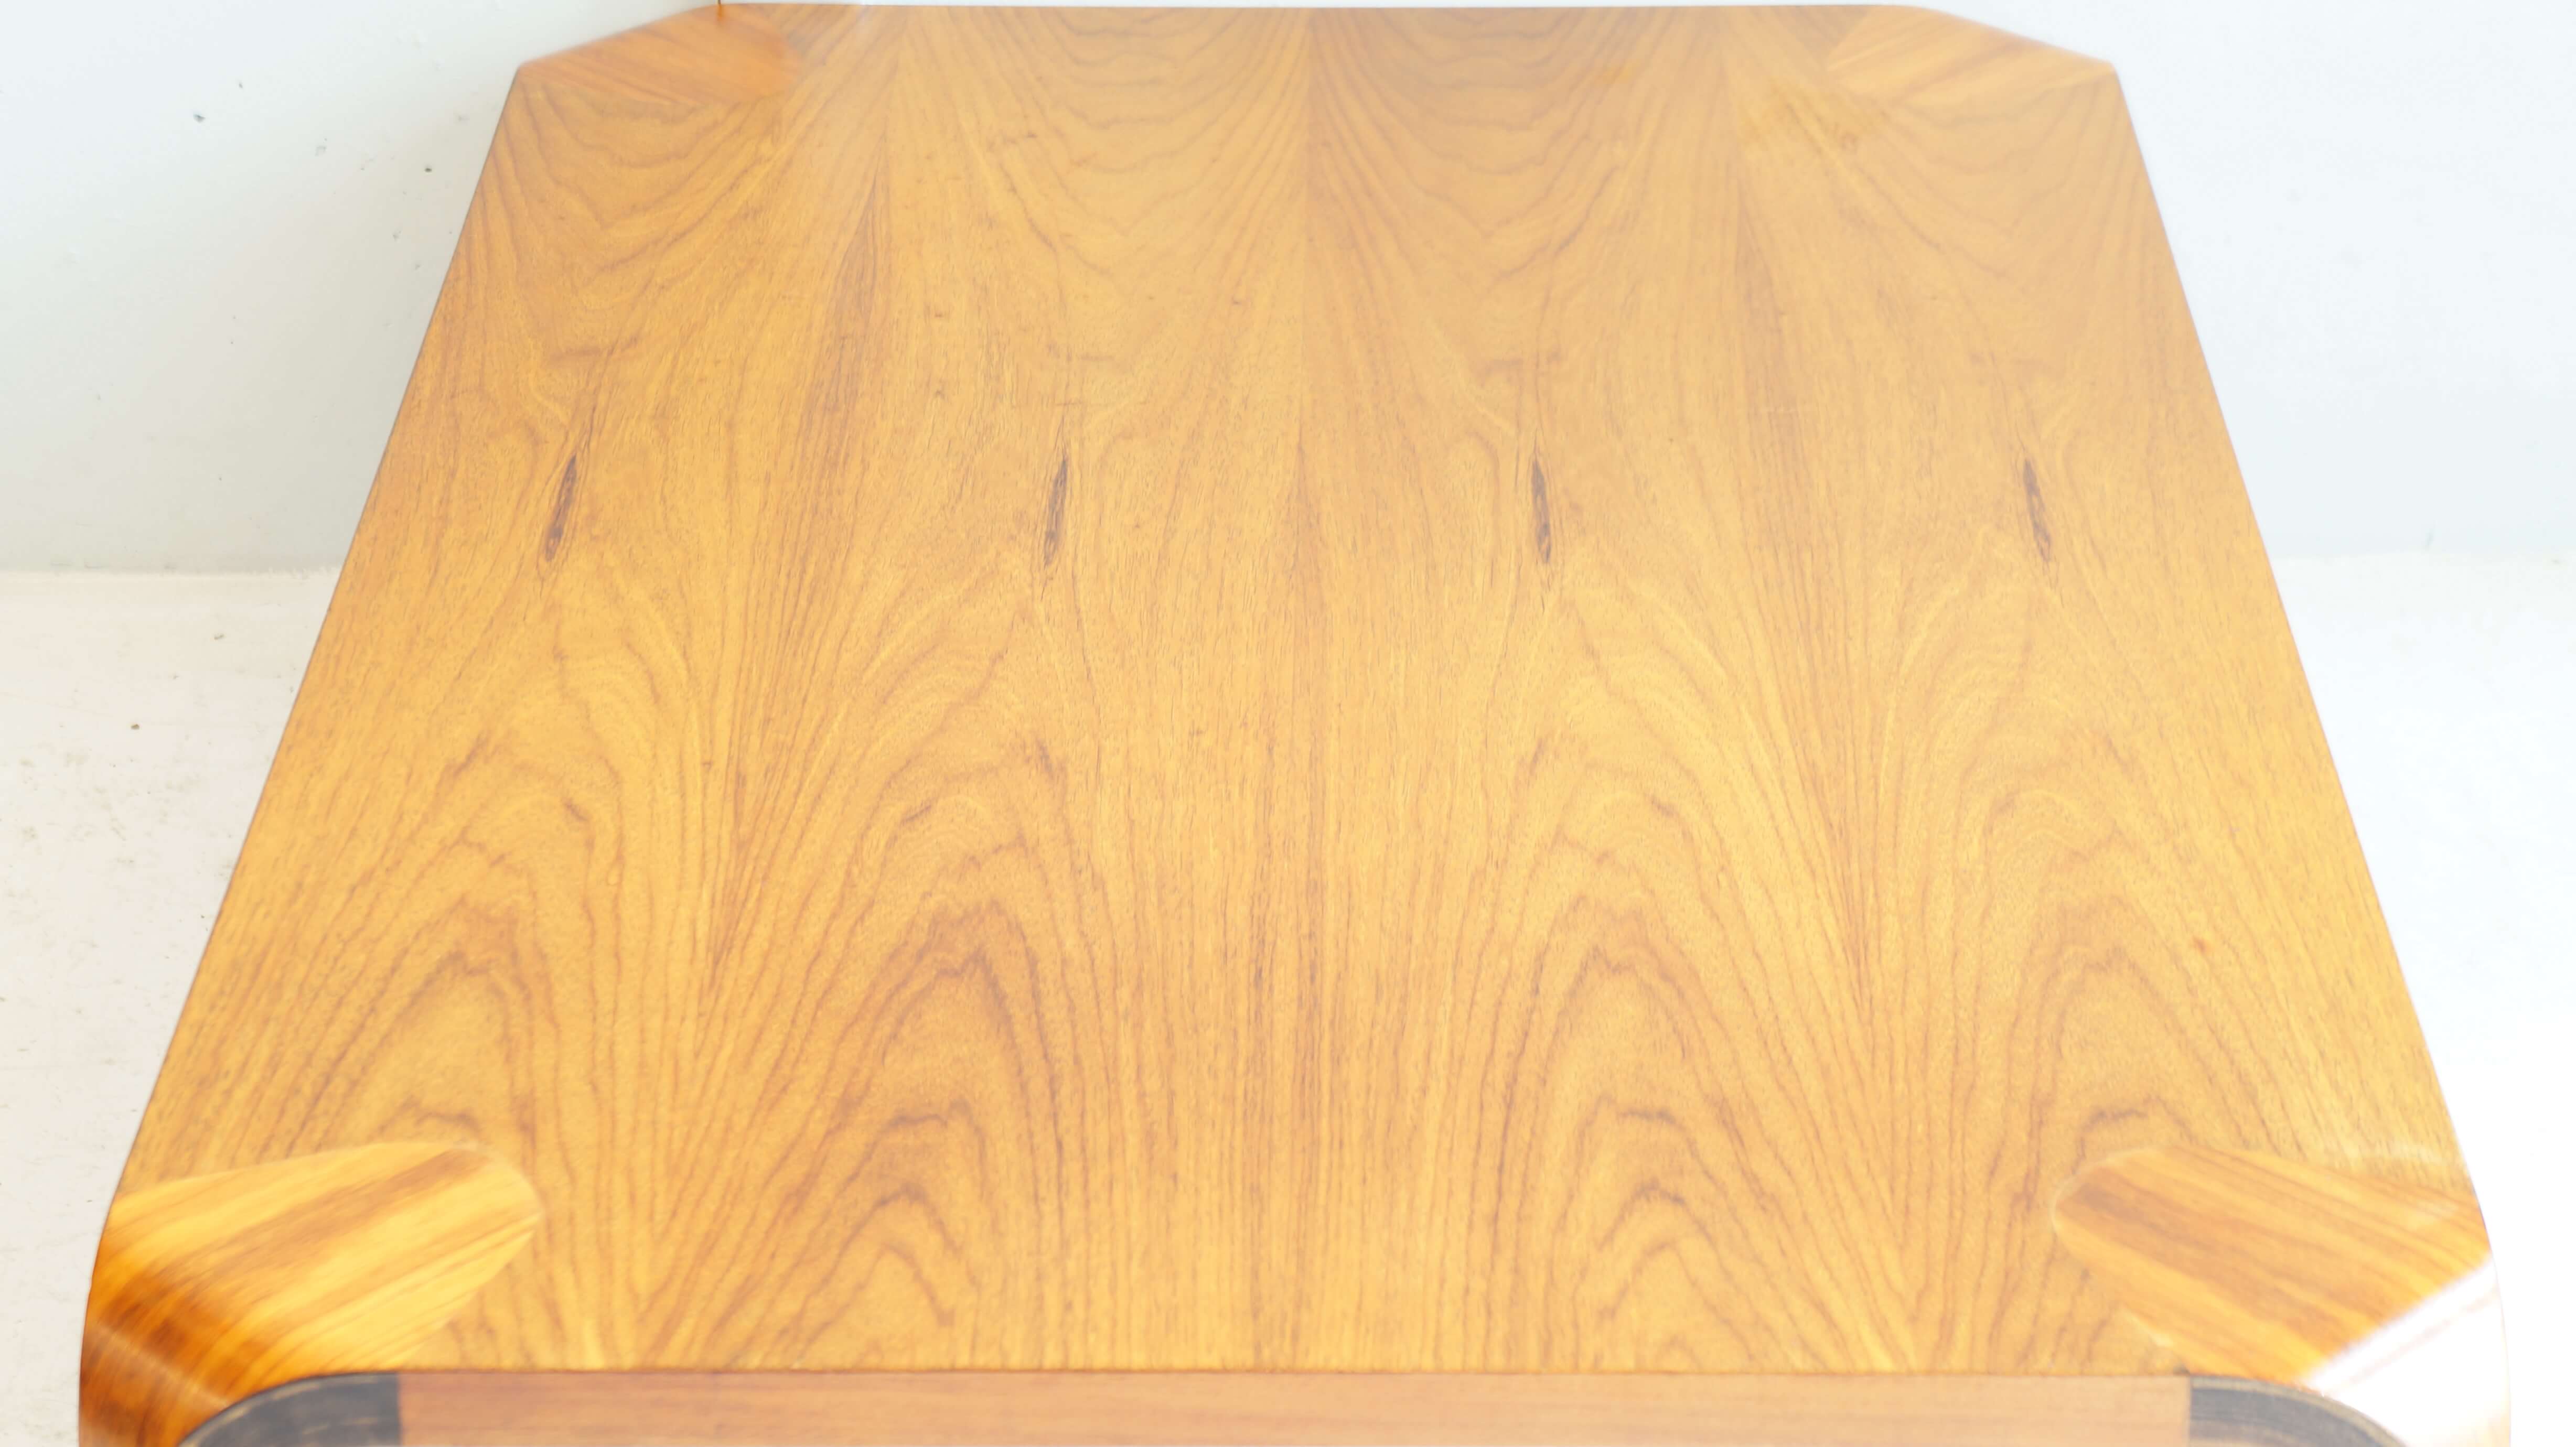 TENDO MOKKO ROSE WOOD LOW TABLE "ZATAKU" DESIGN BY SABURO INUI /廃盤 天童木工 ローズウッド 座卓 センターテーブル 乾 三郎 デザイン